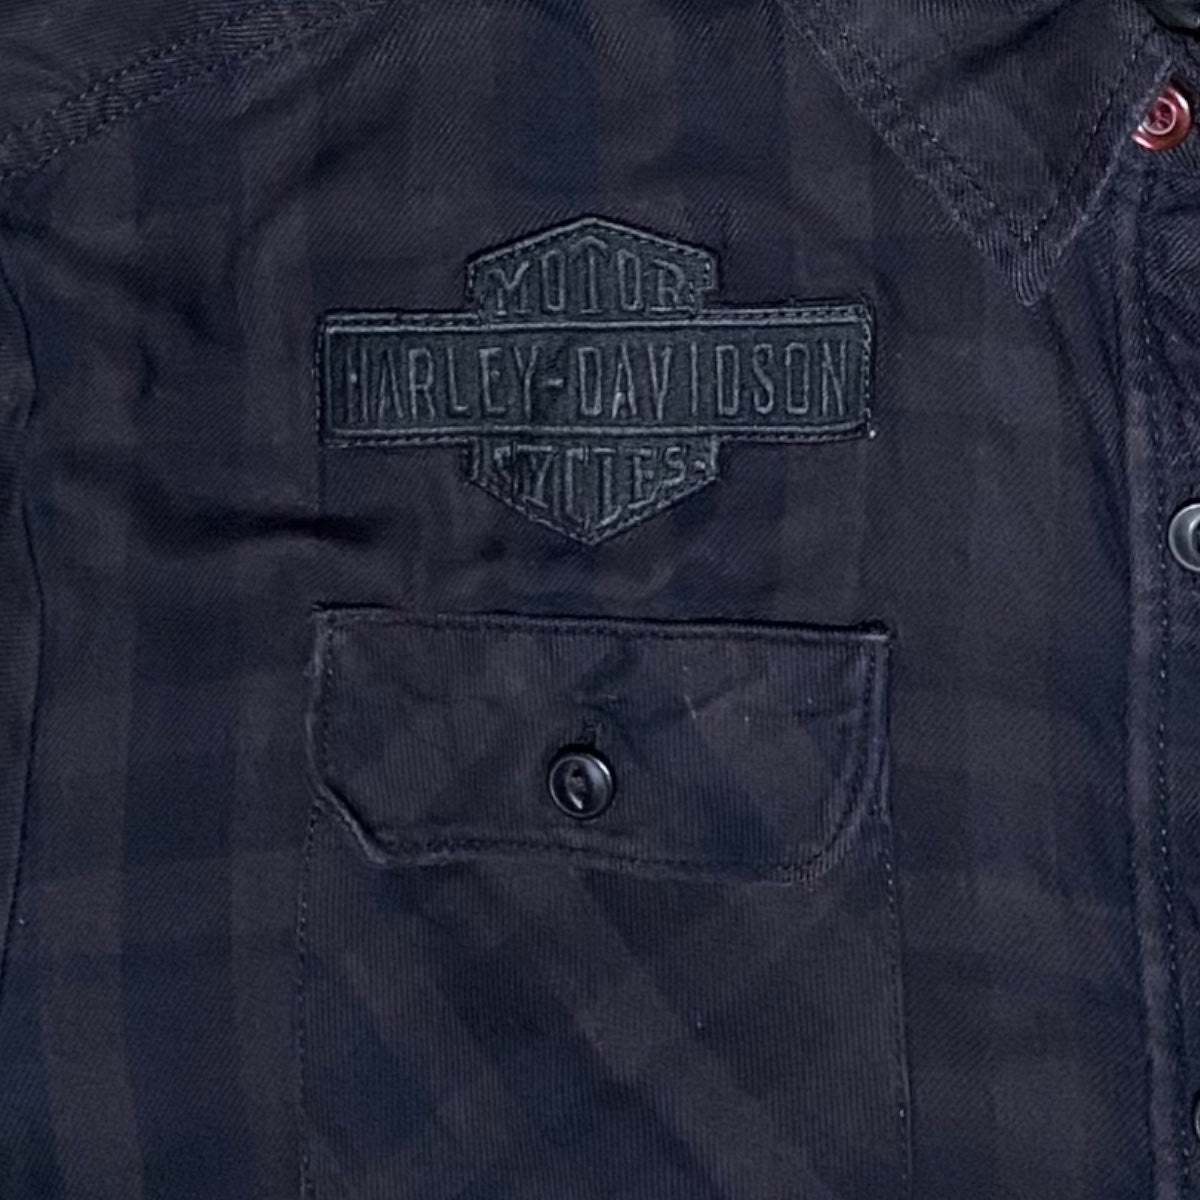 Vintage Harley Davidson checkered shirt - M